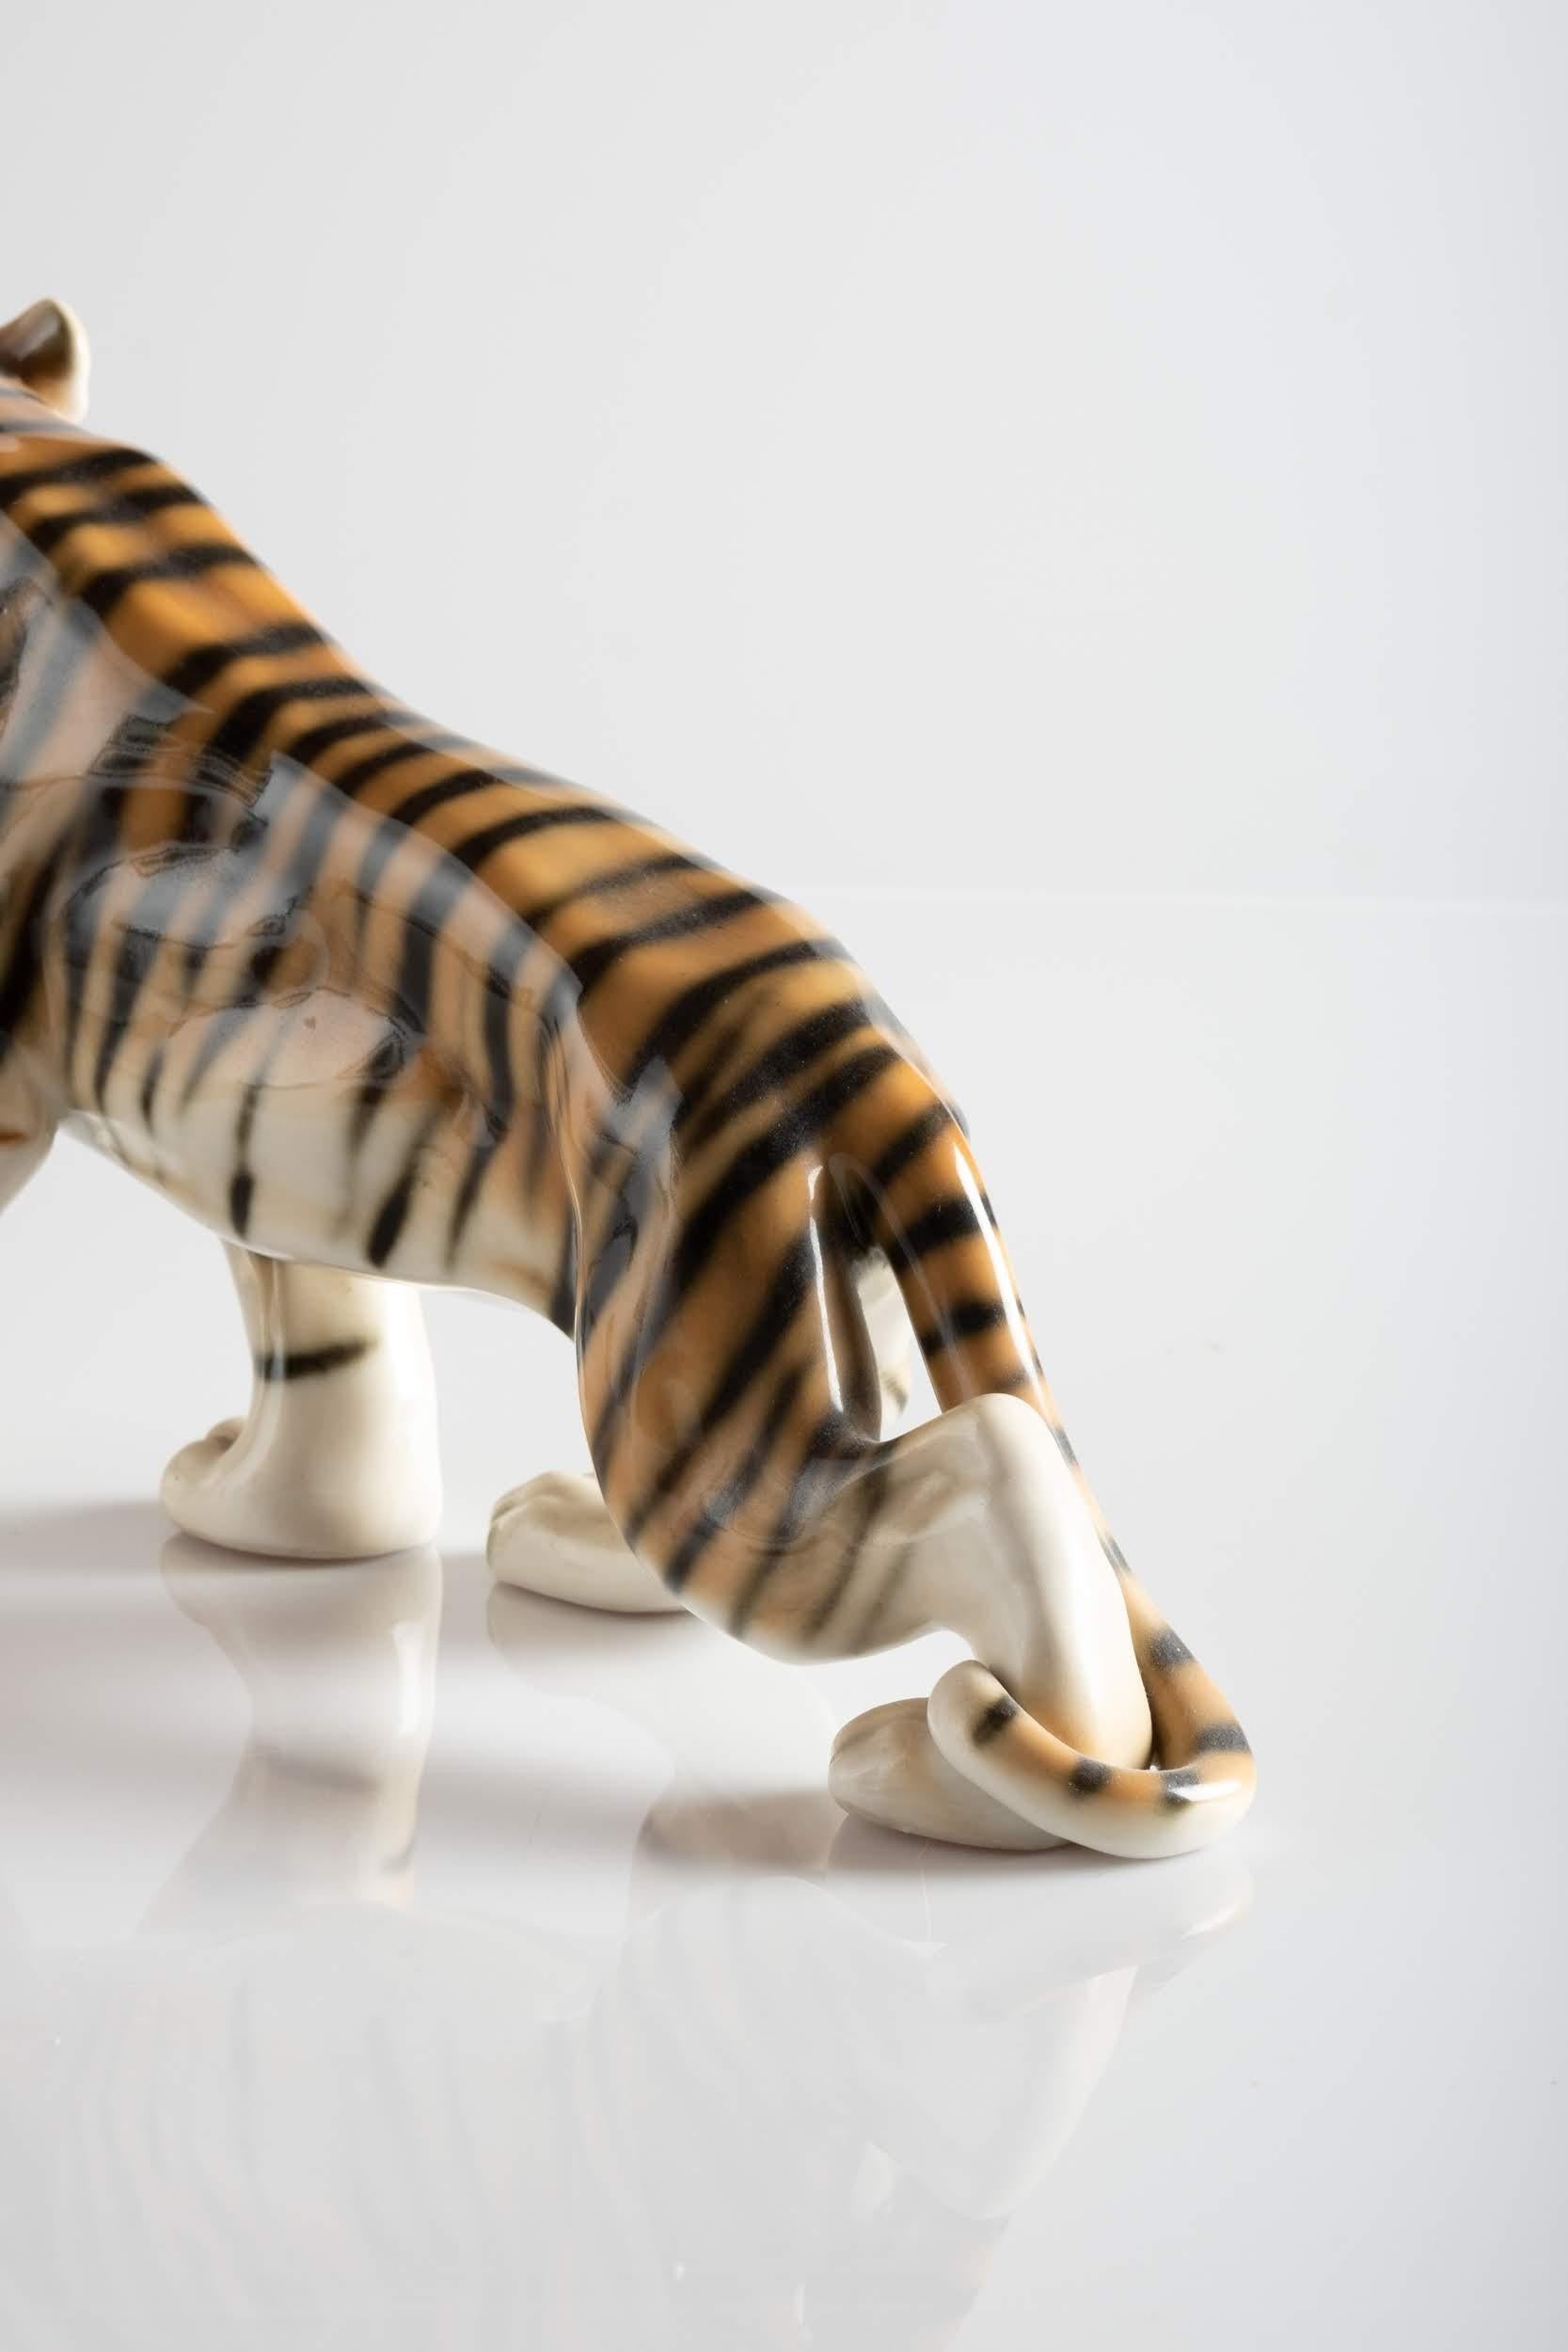 Tiger Porcelain Sculpture, Italy, circa 1950 For Sale 1